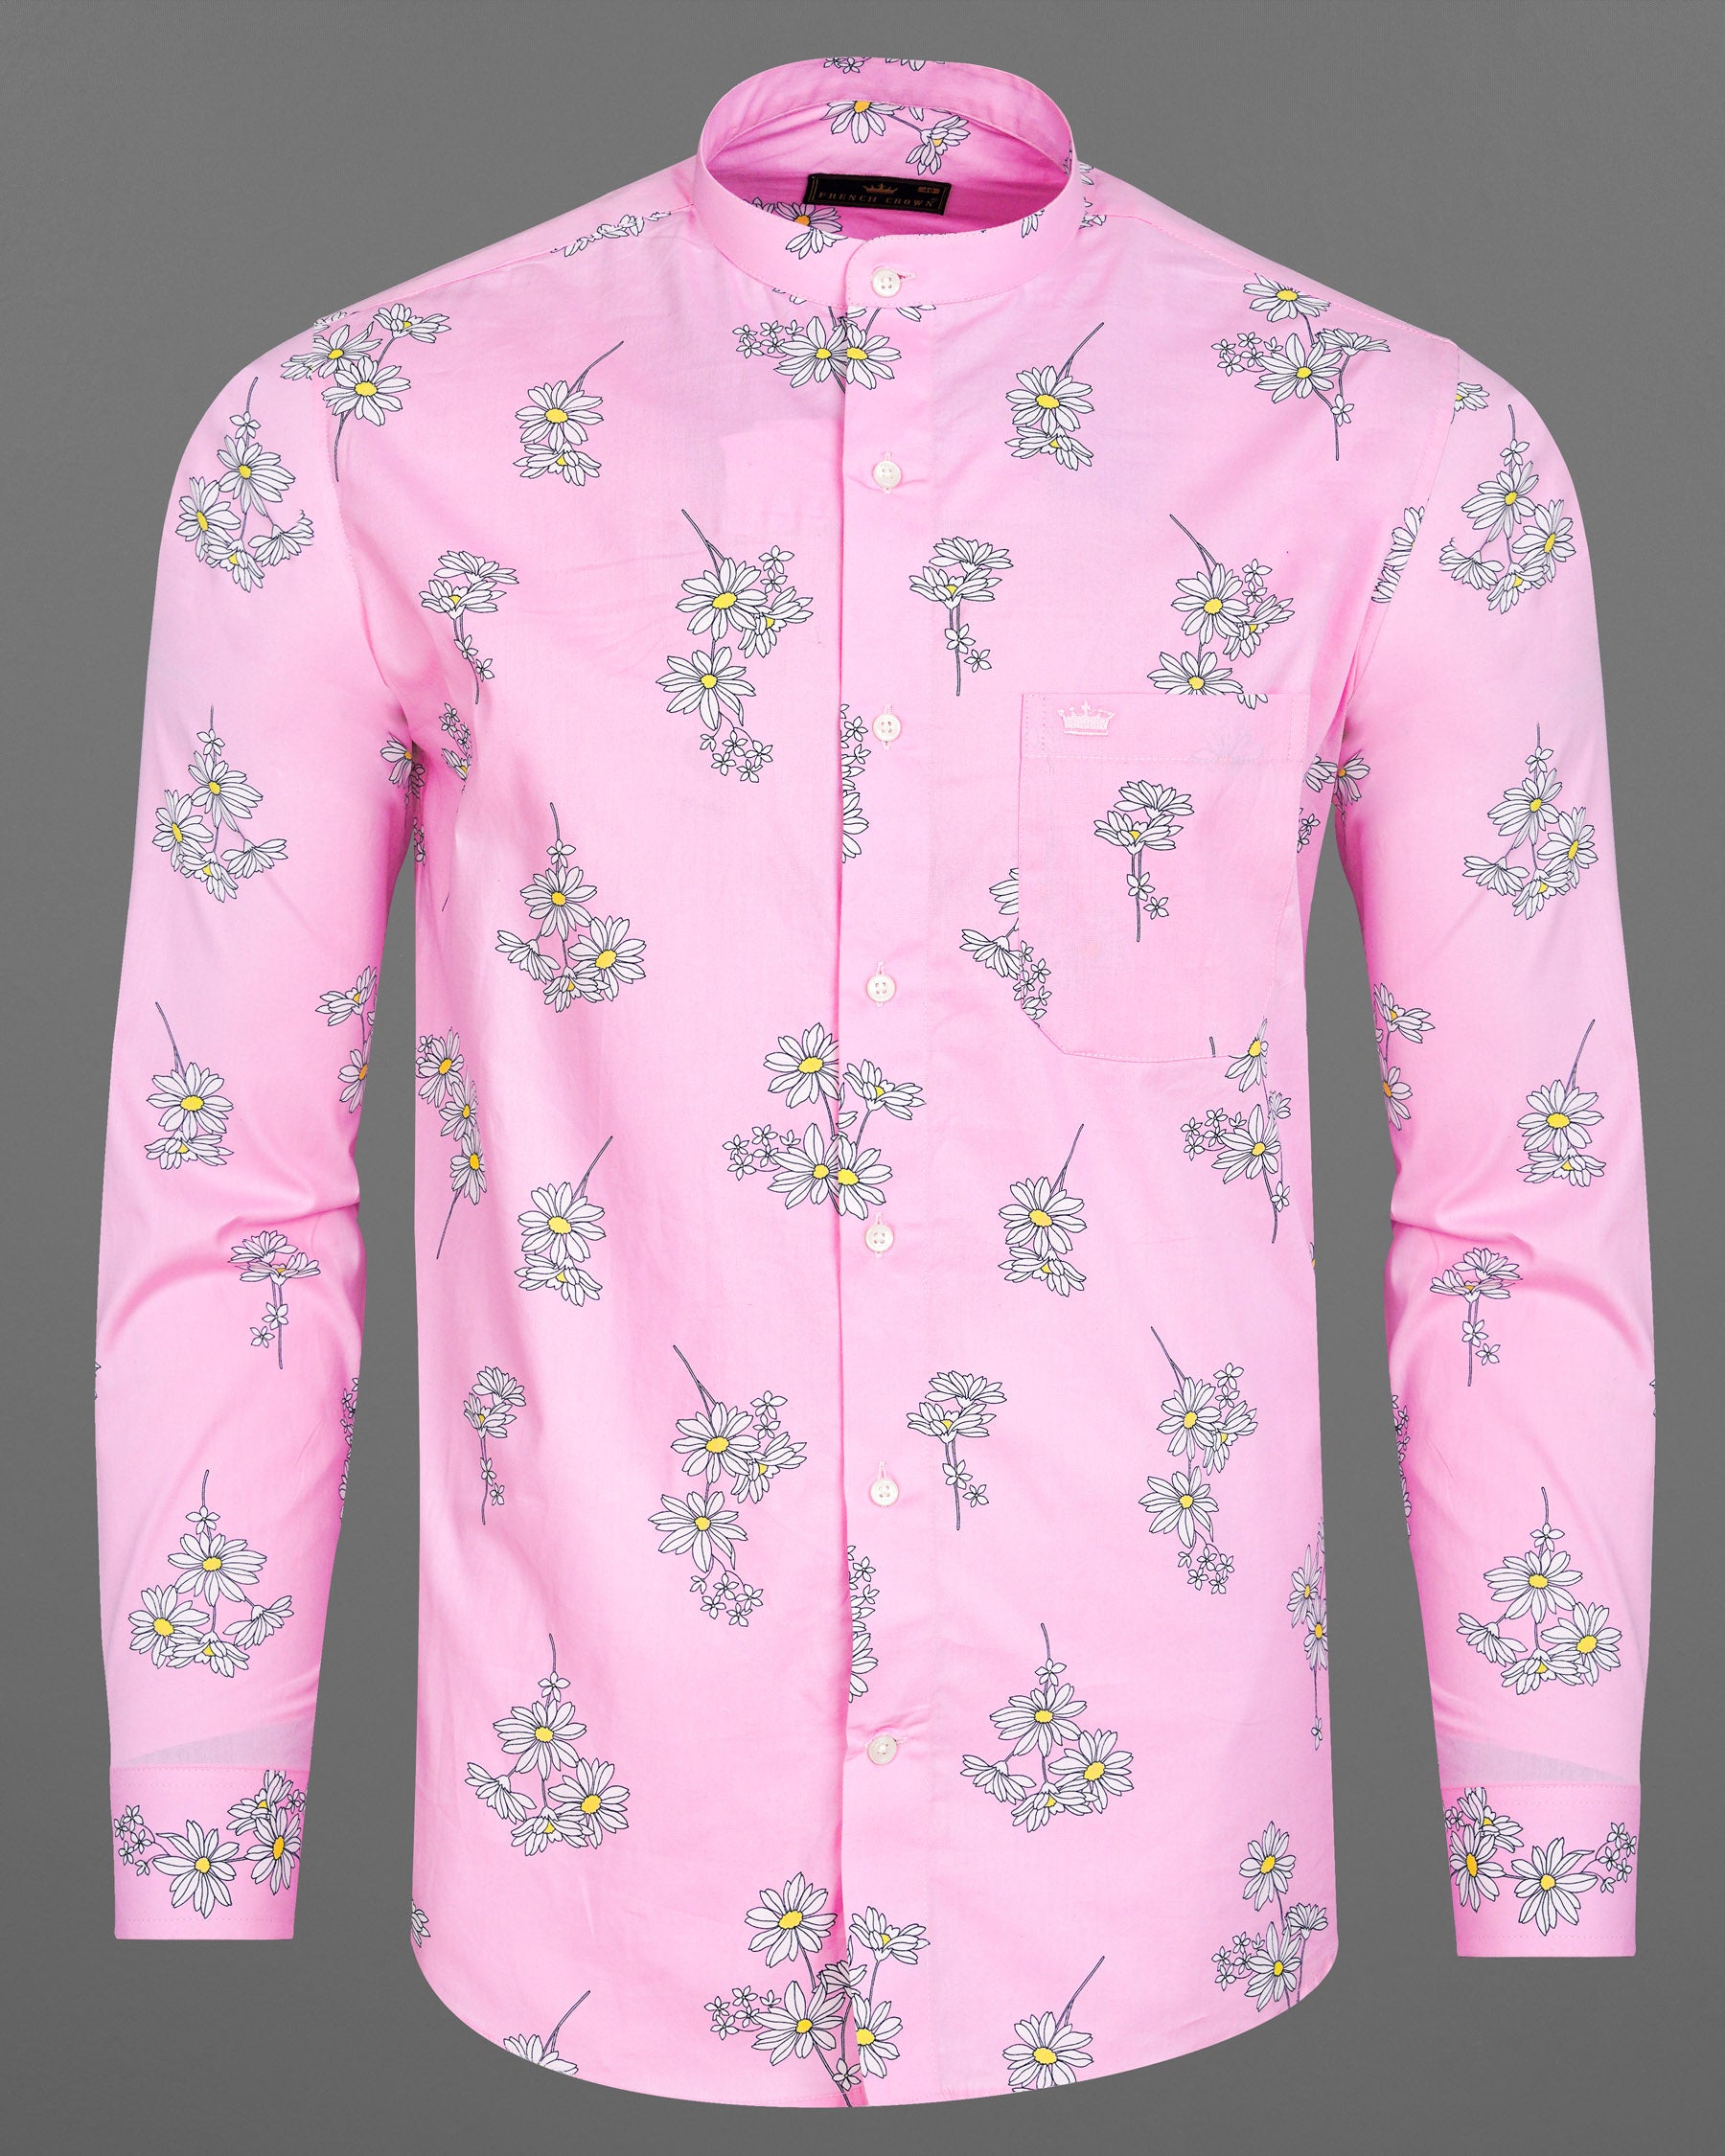 Chantilly Pink Floral Printed Premium Cotton Shirt 7807-M-38, 7807-M-H-38, 7807-M-39, 7807-M-H-39, 7807-M-40, 7807-M-H-40, 7807-M-42, 7807-M-H-42, 7807-M-44, 7807-M-H-44, 7807-M-46, 7807-M-H-46, 7807-M-48, 7807-M-H-48, 7807-M-50, 7807-M-H-50, 7807-M-52, 7807-M-H-52